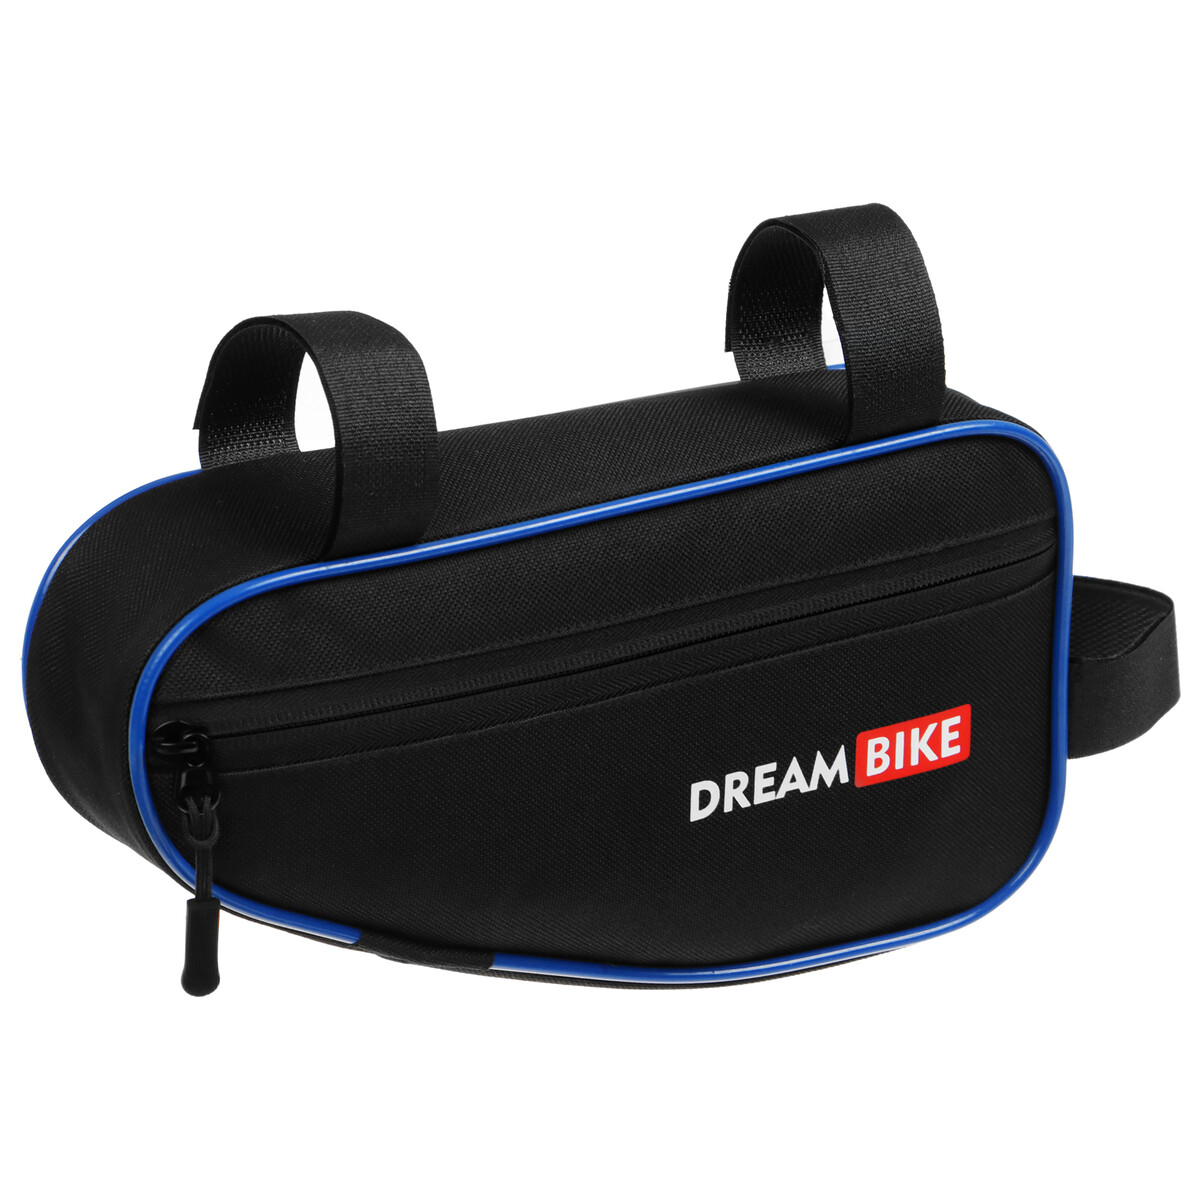 Велосумка dream bike под раму, 26х13.5х5, цвет черный/синий велосумка под раму жесткая